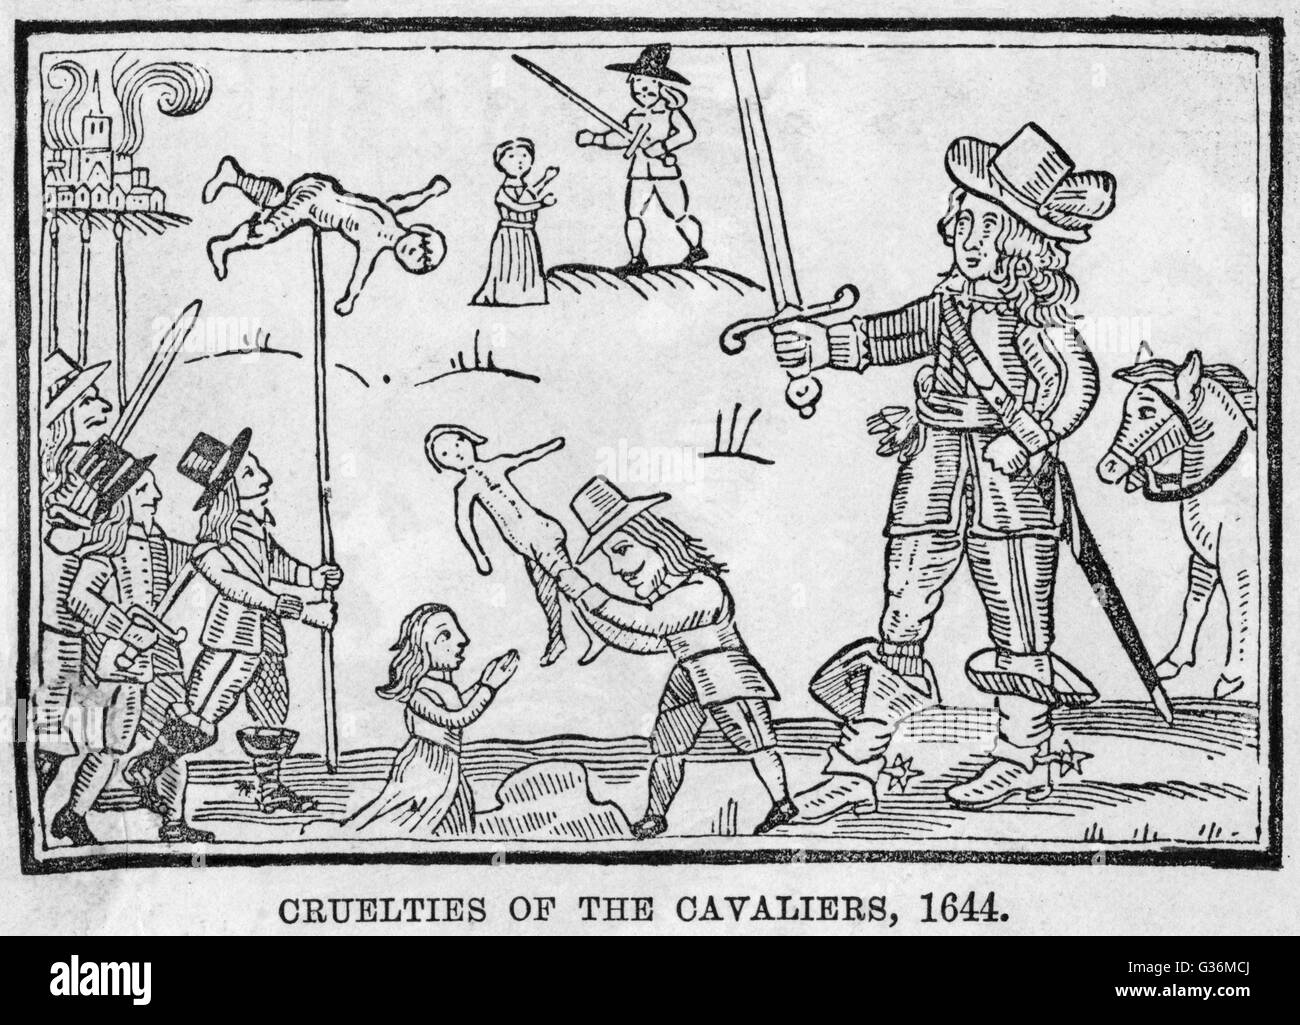 La crudeltà dei Cavalieri - propaganda puritana data: 1644 Foto Stock